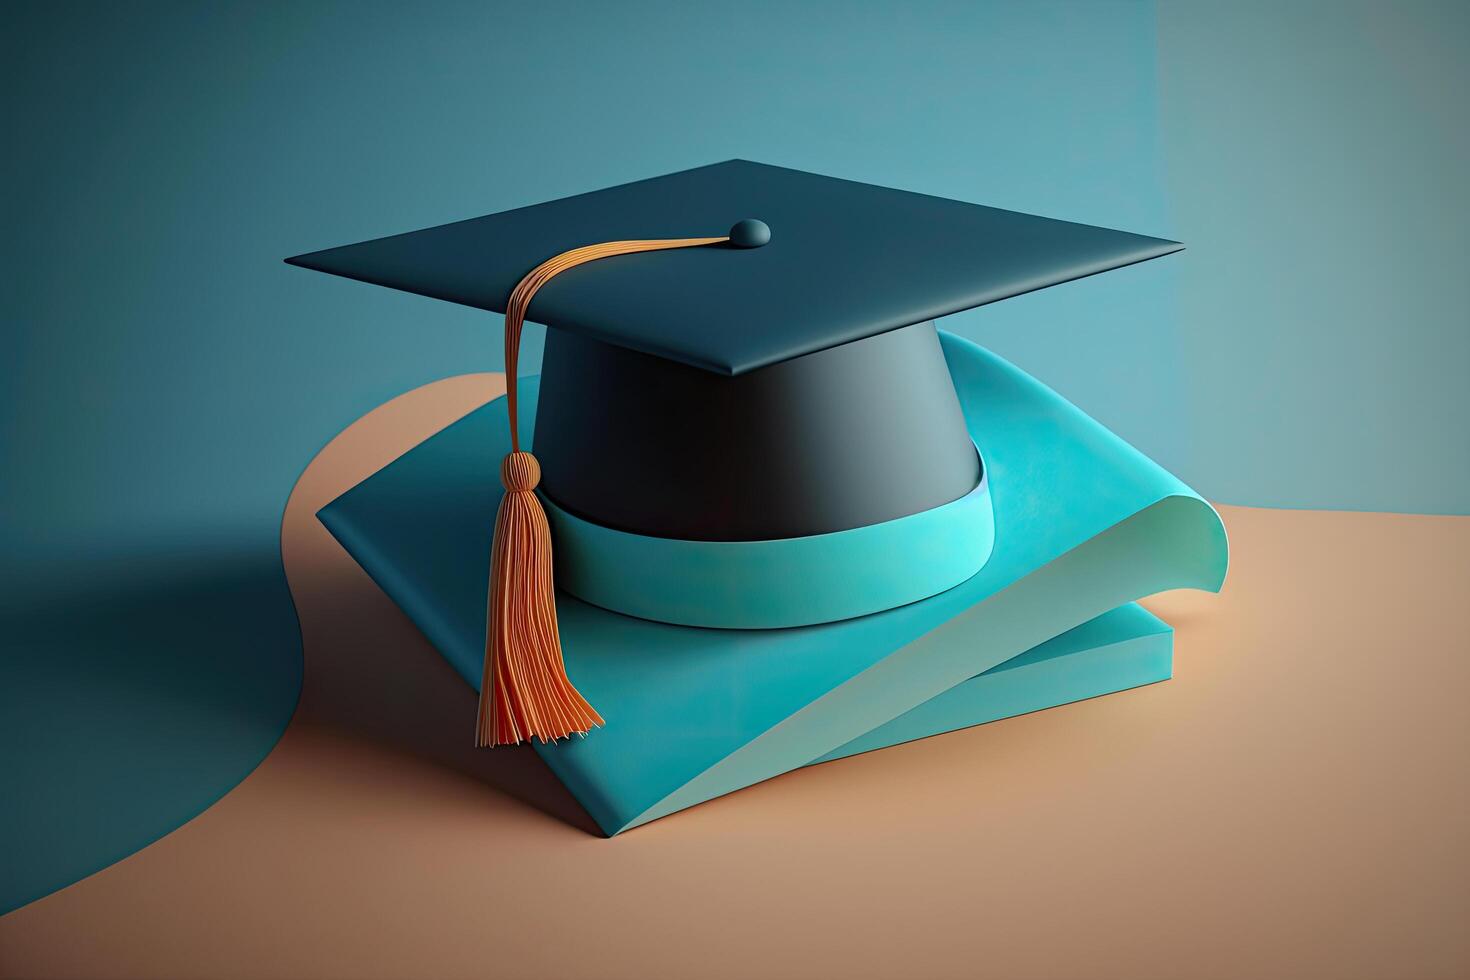 Graduation cap with books. Illustration photo